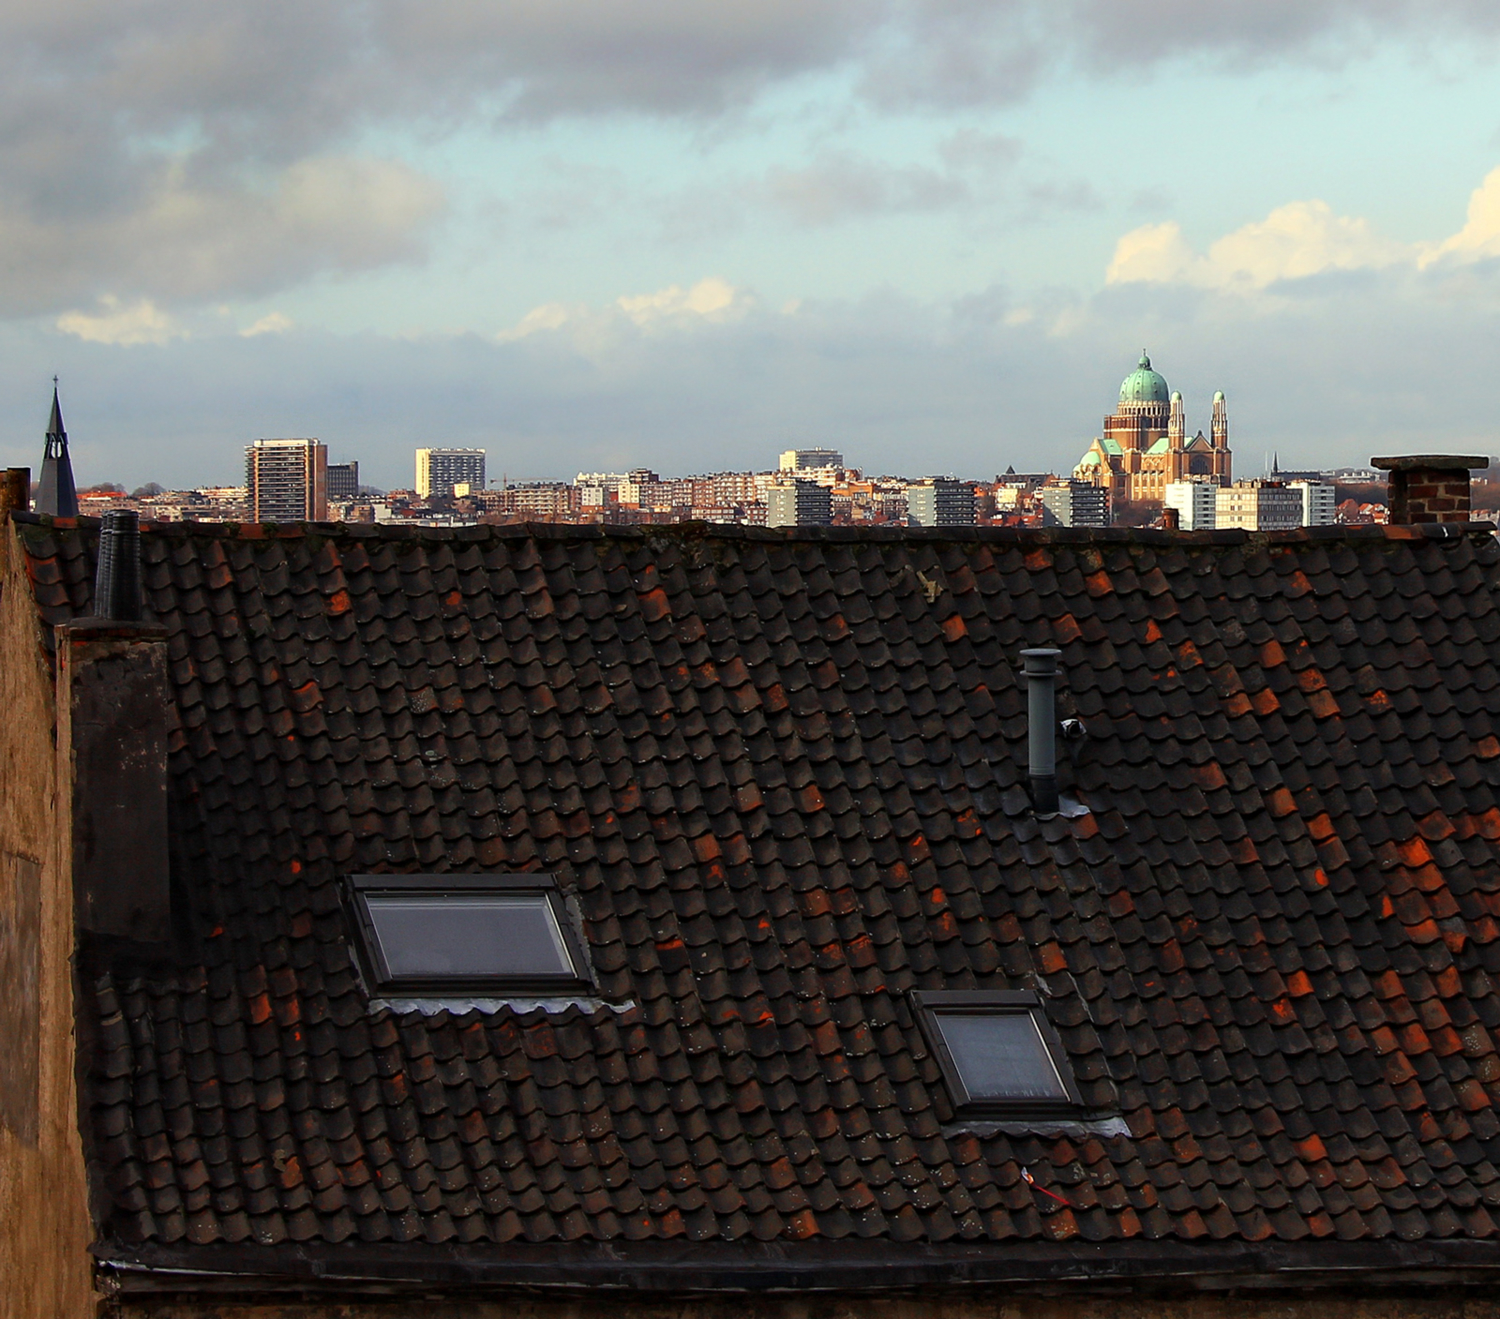 Город на крыше